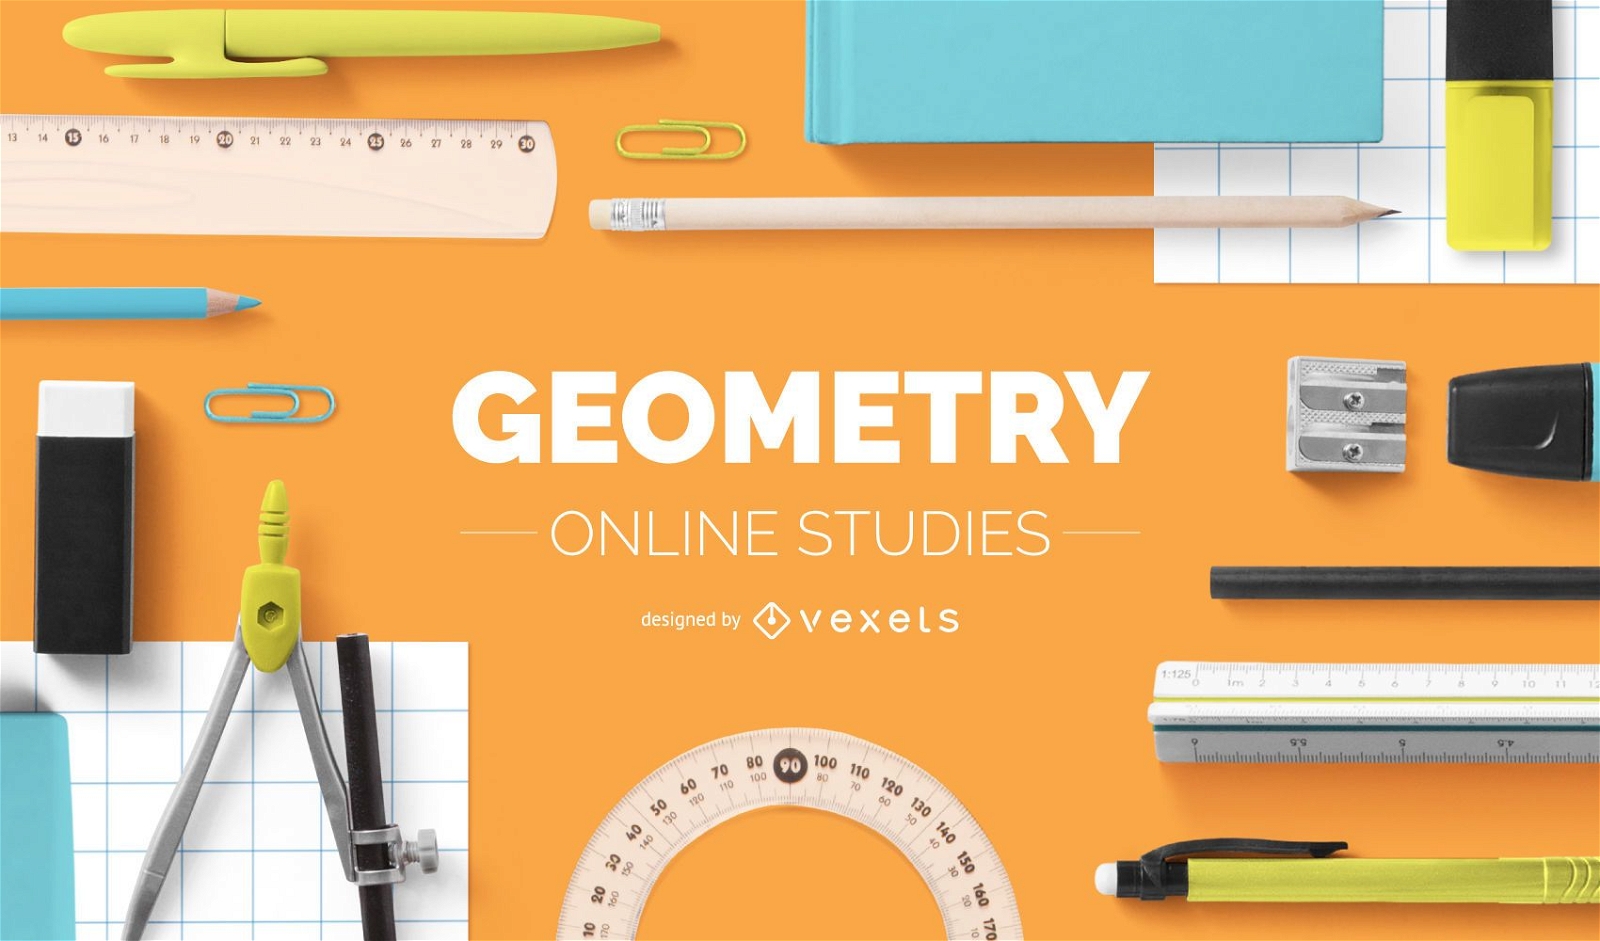 Geometry online studies cover design